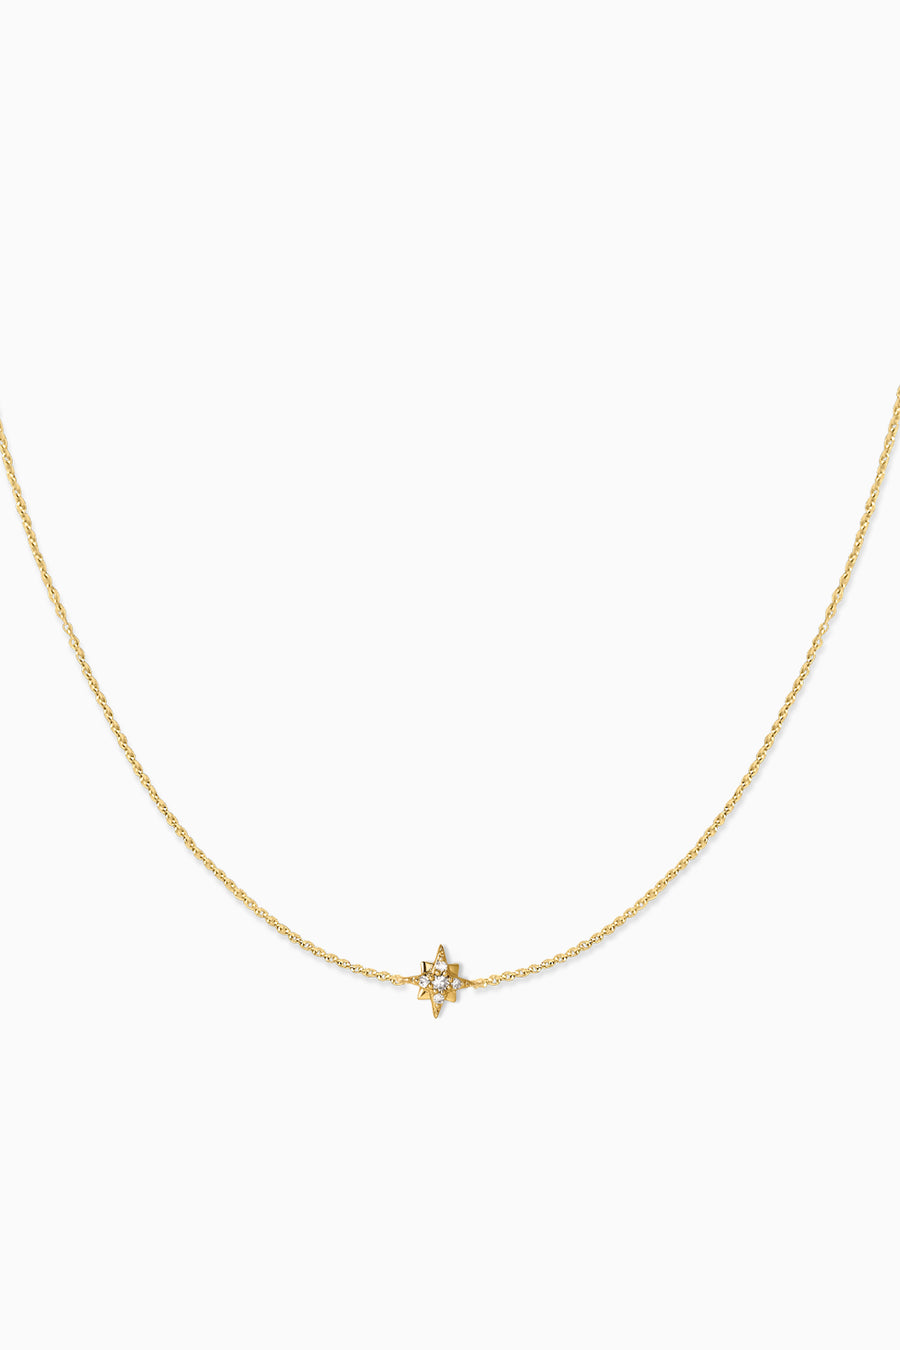 Covet 10kt Gold & Diamond Single Charm Necklace